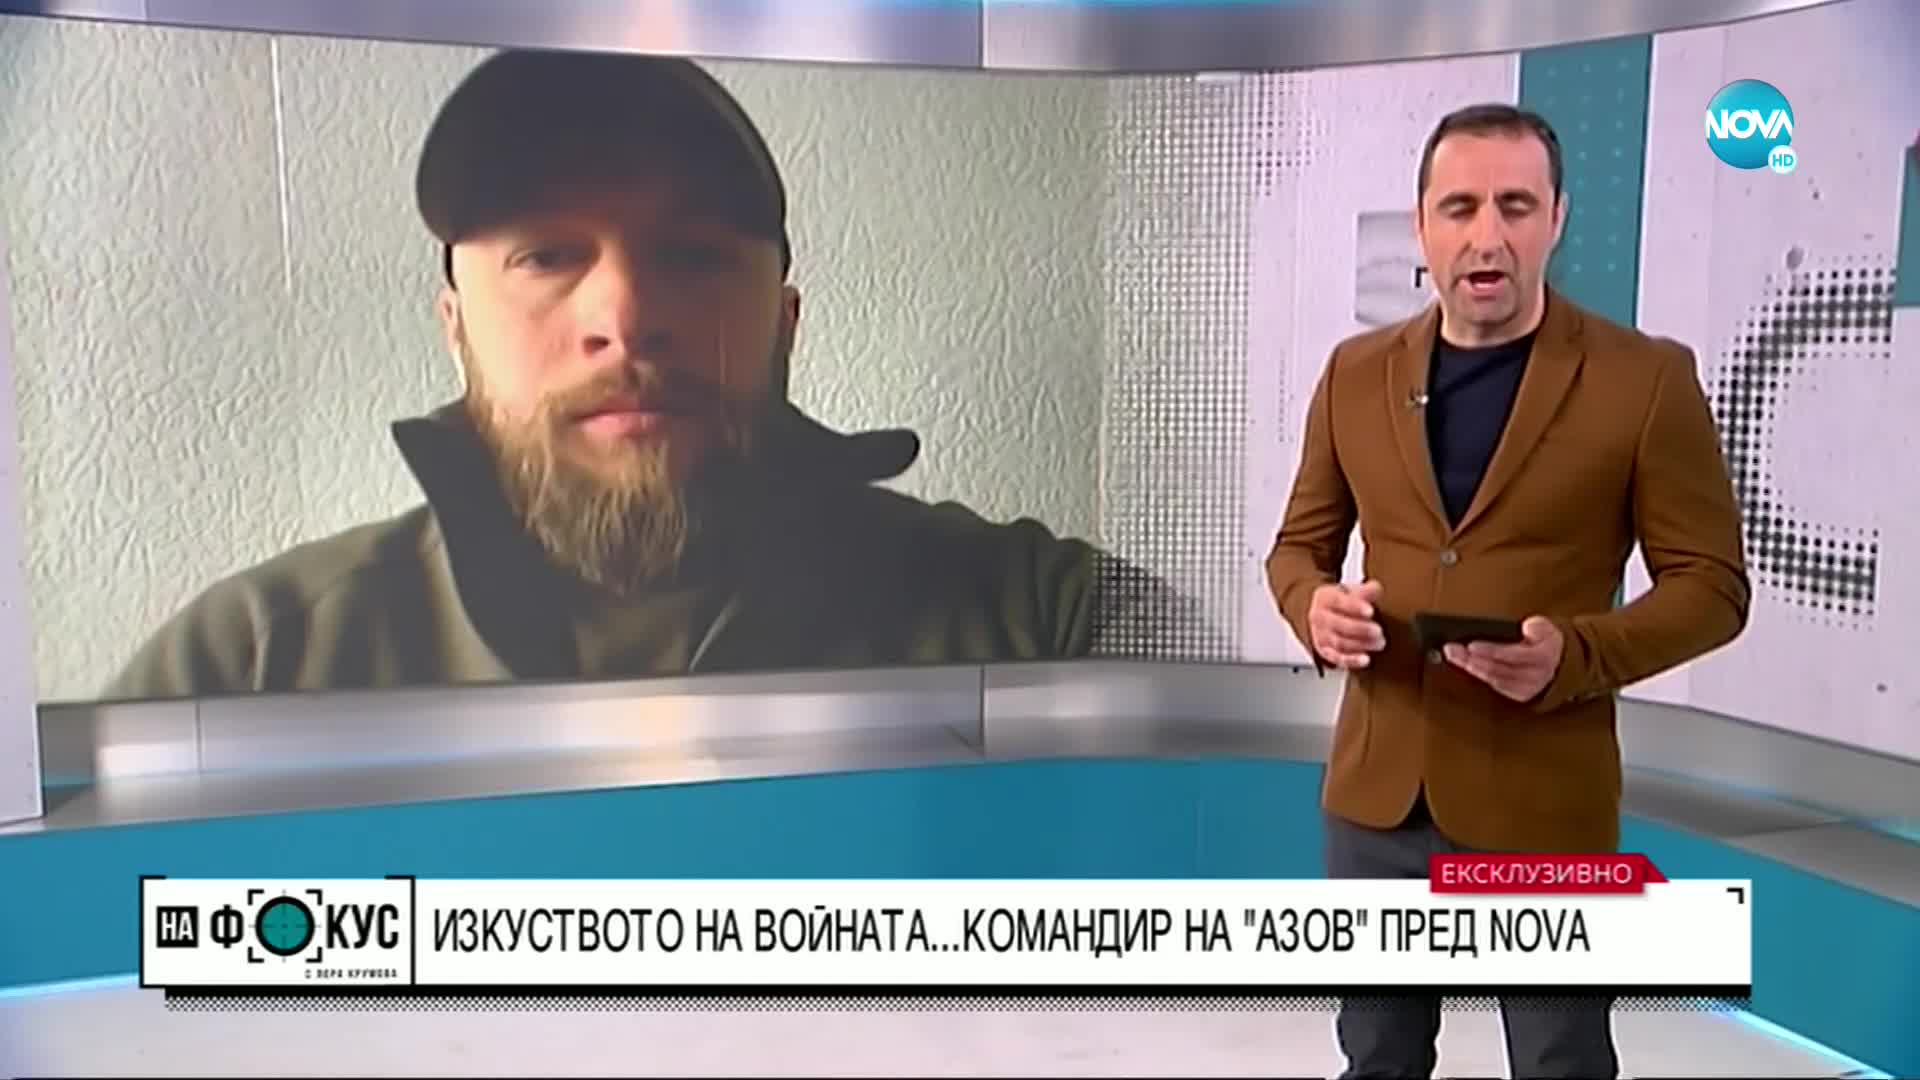 ЕКСКЛУЗИВНО: Командирът на батальона "Азов" в Киев